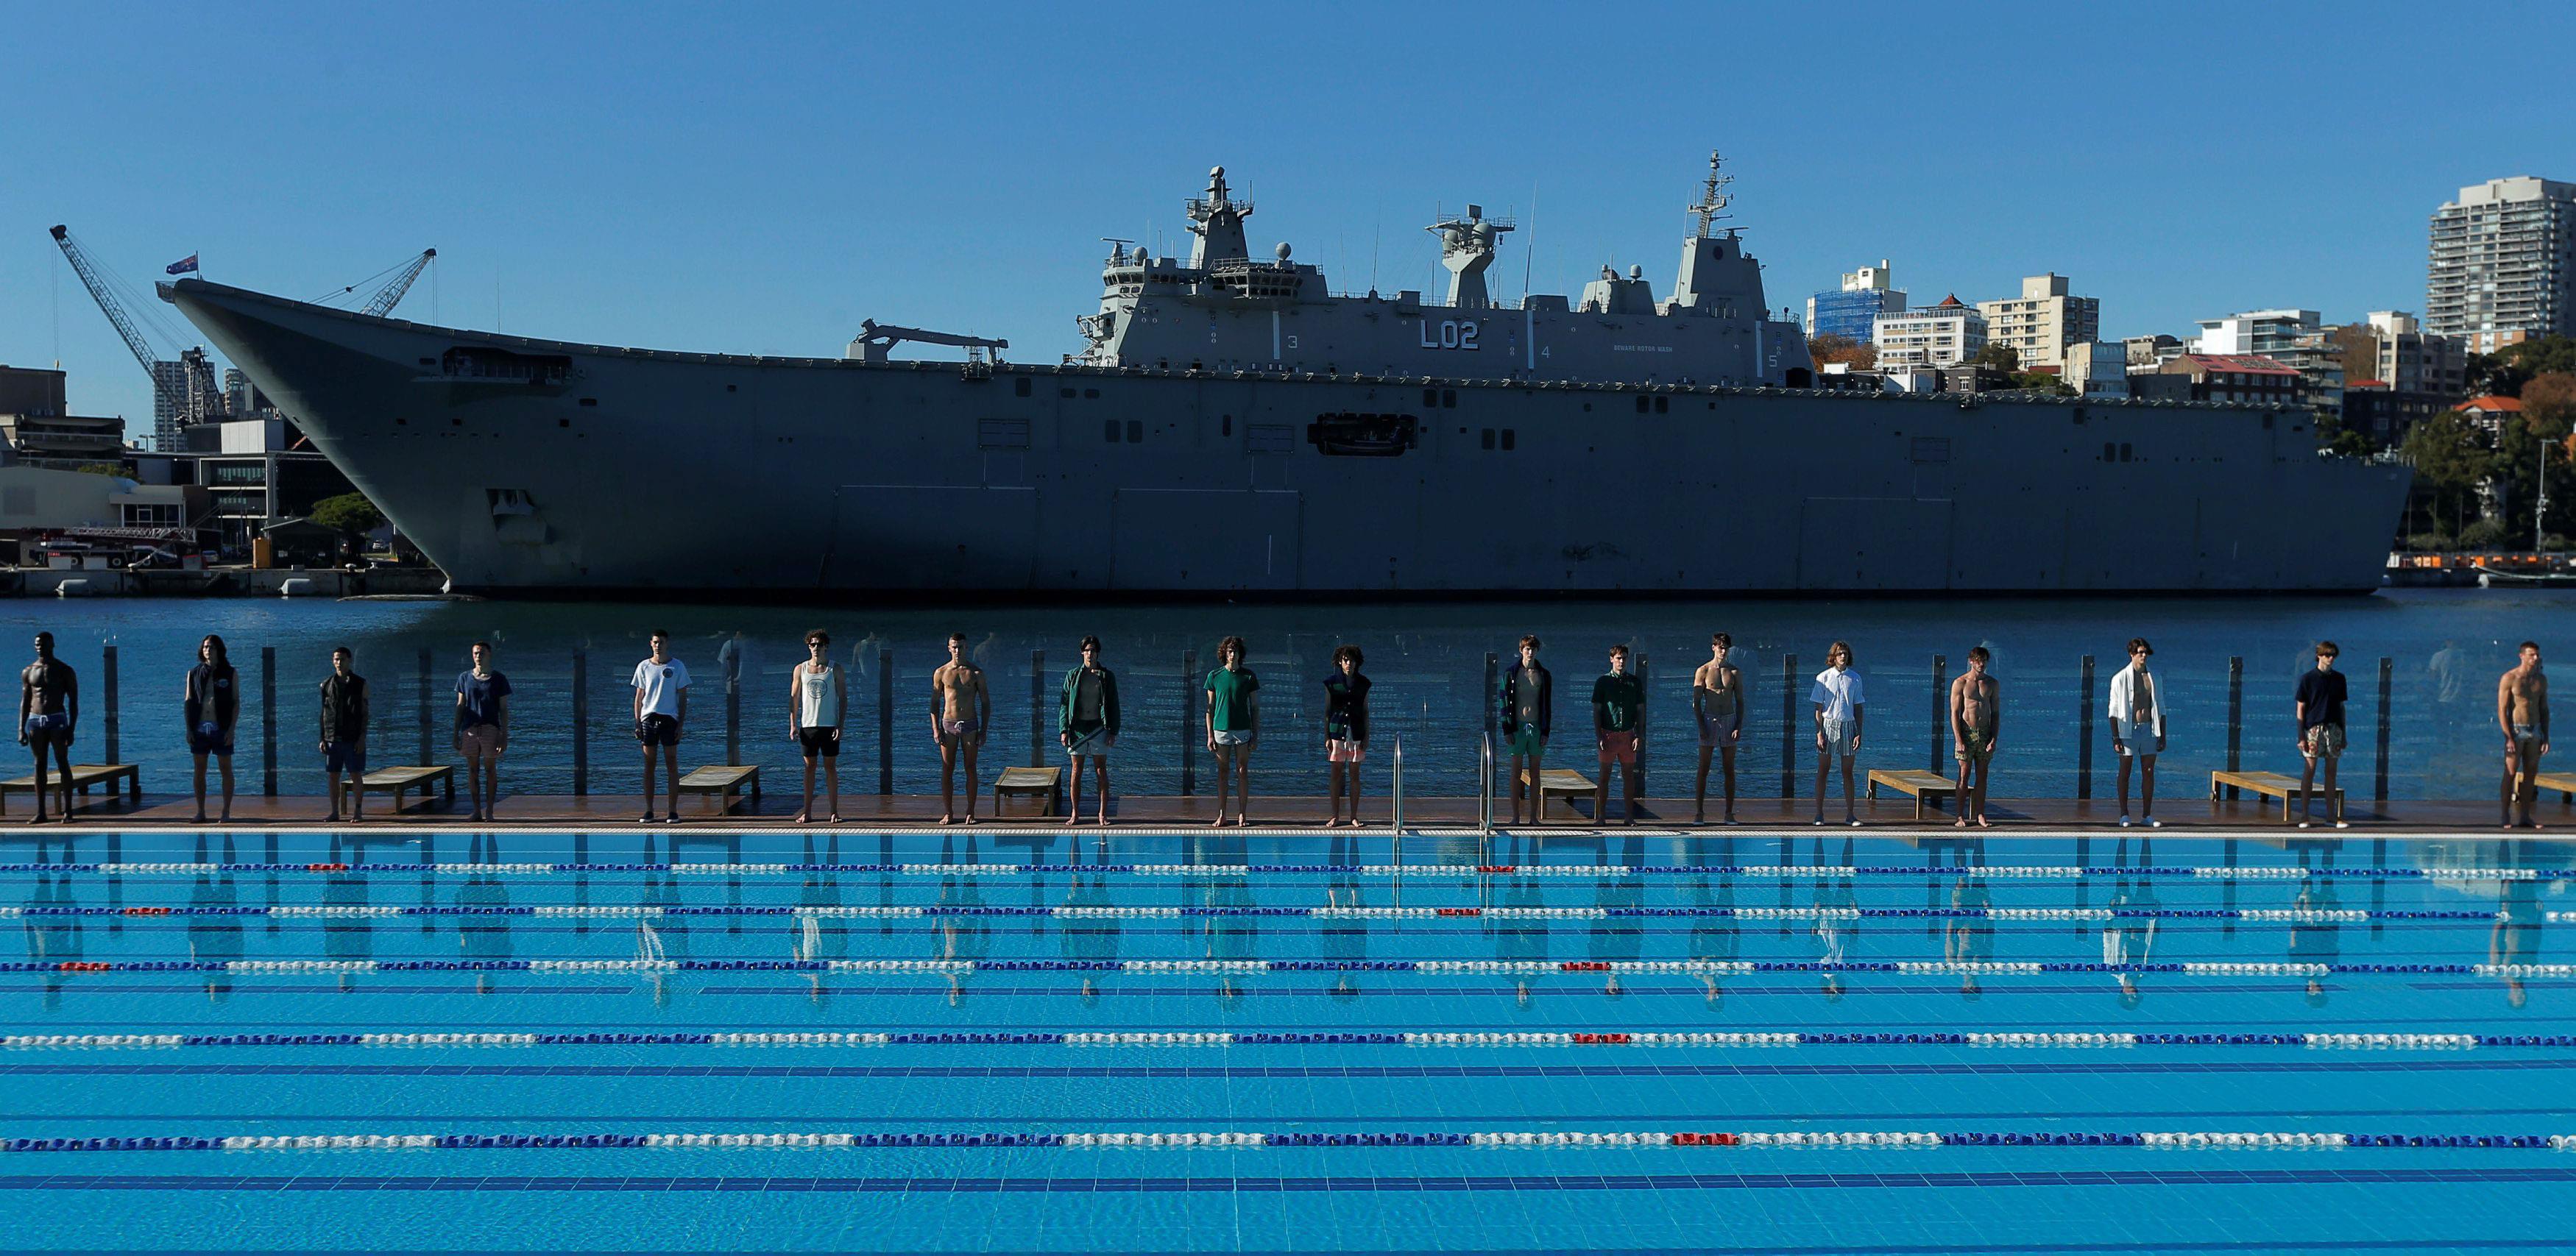 Australia's naval ship HMAS Canberra forms a backdrop as Sydney's Andrew 